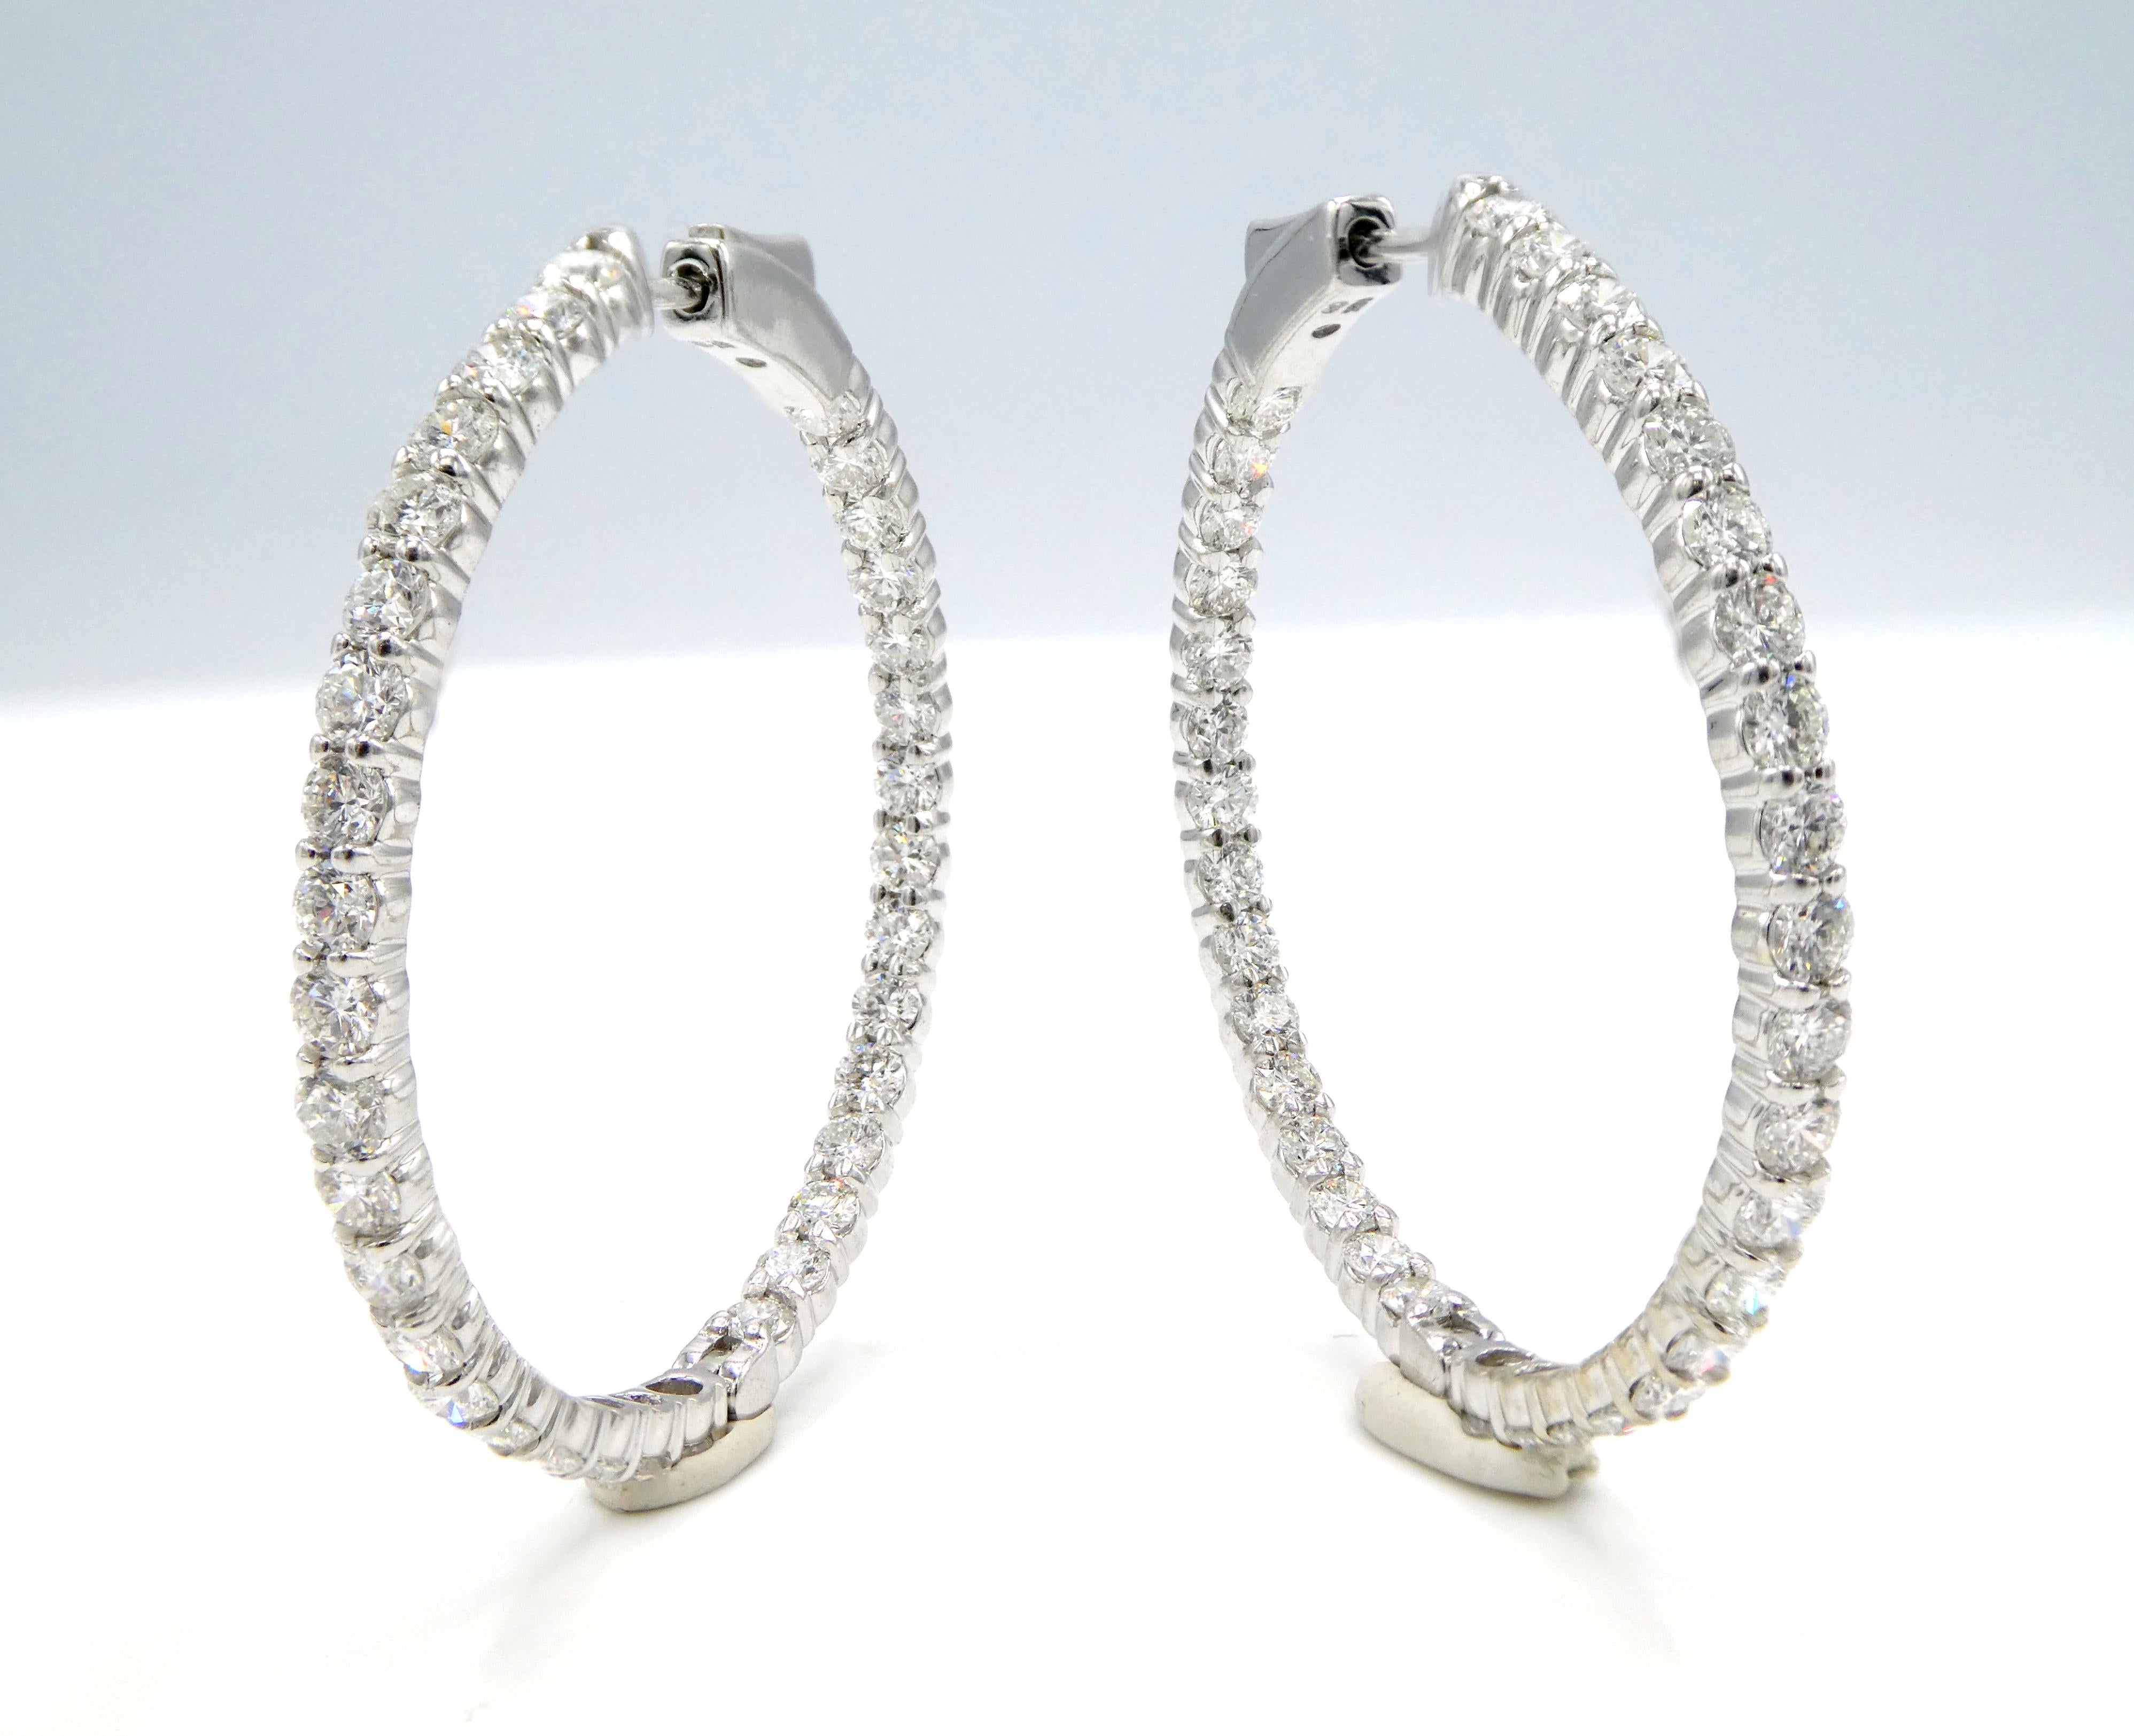 White Gold 5.50 Carat Inside Outside Hoop Earrings 
Metal: 14k white gold
Weight: 9.45 grams
Diamonds: 70 round natural diamonds approx. 5.5 CTW G-H VS
Diameter 36mm
Width: 2.7mm
